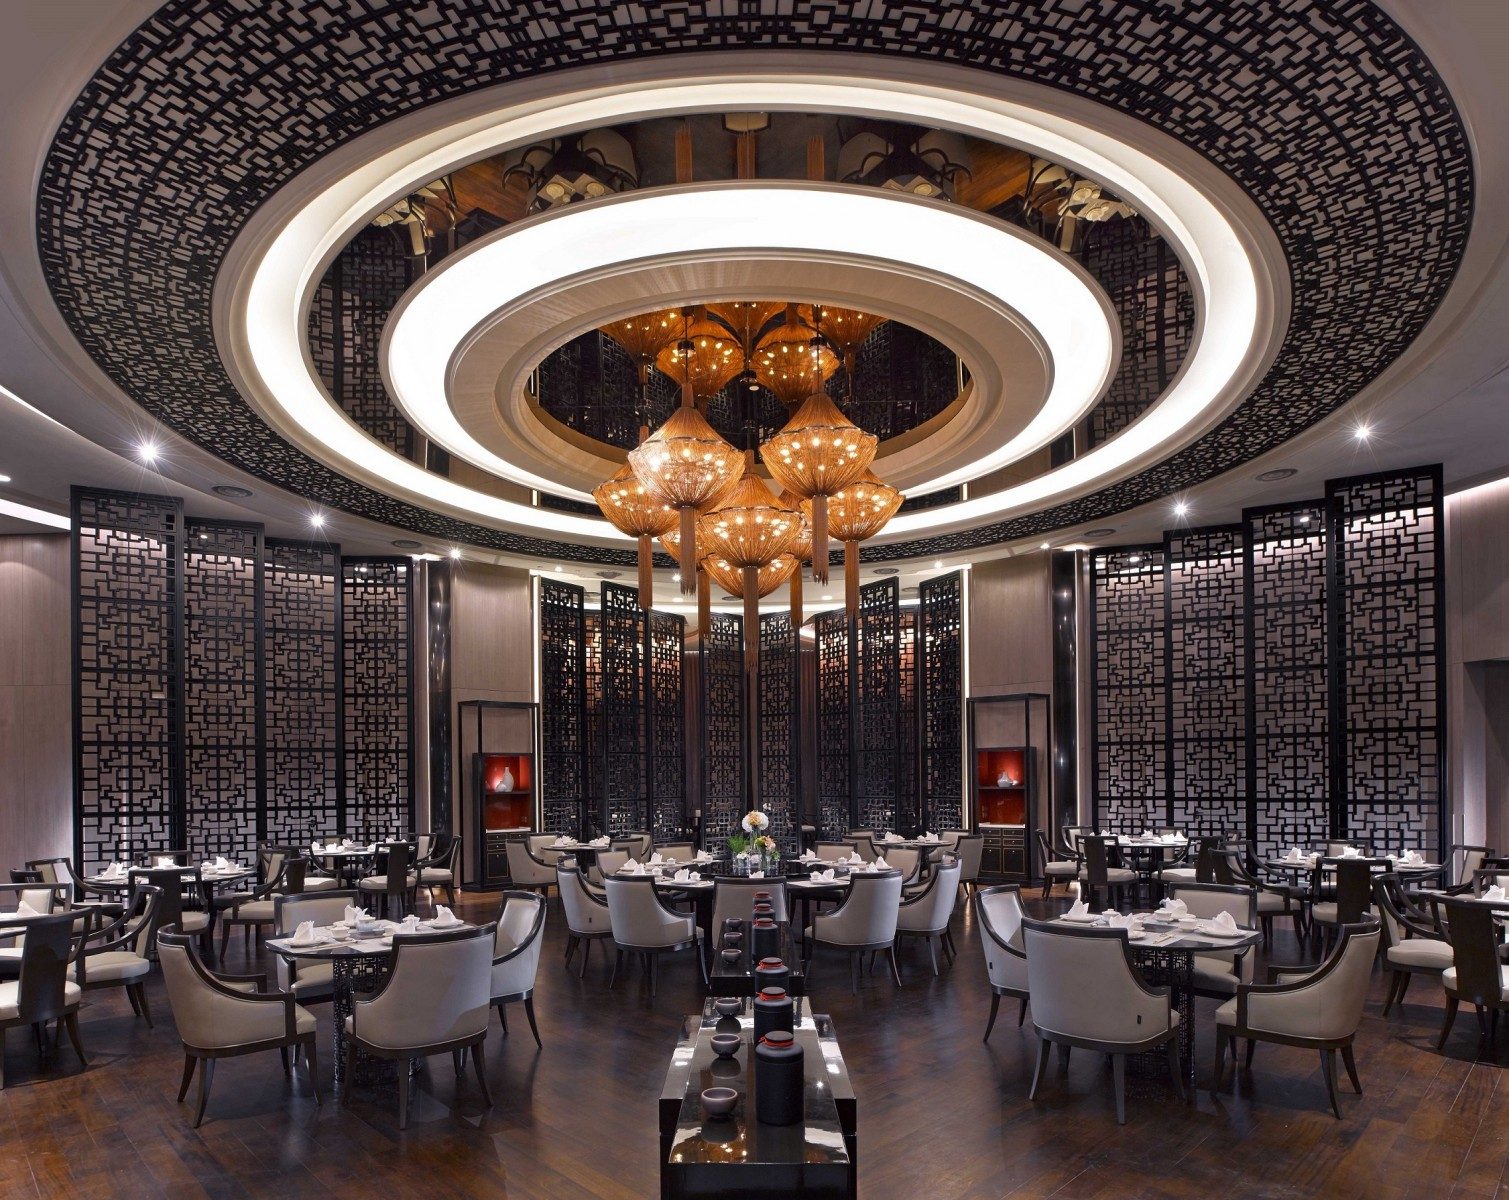 wan chun ting imperial cuisine interior